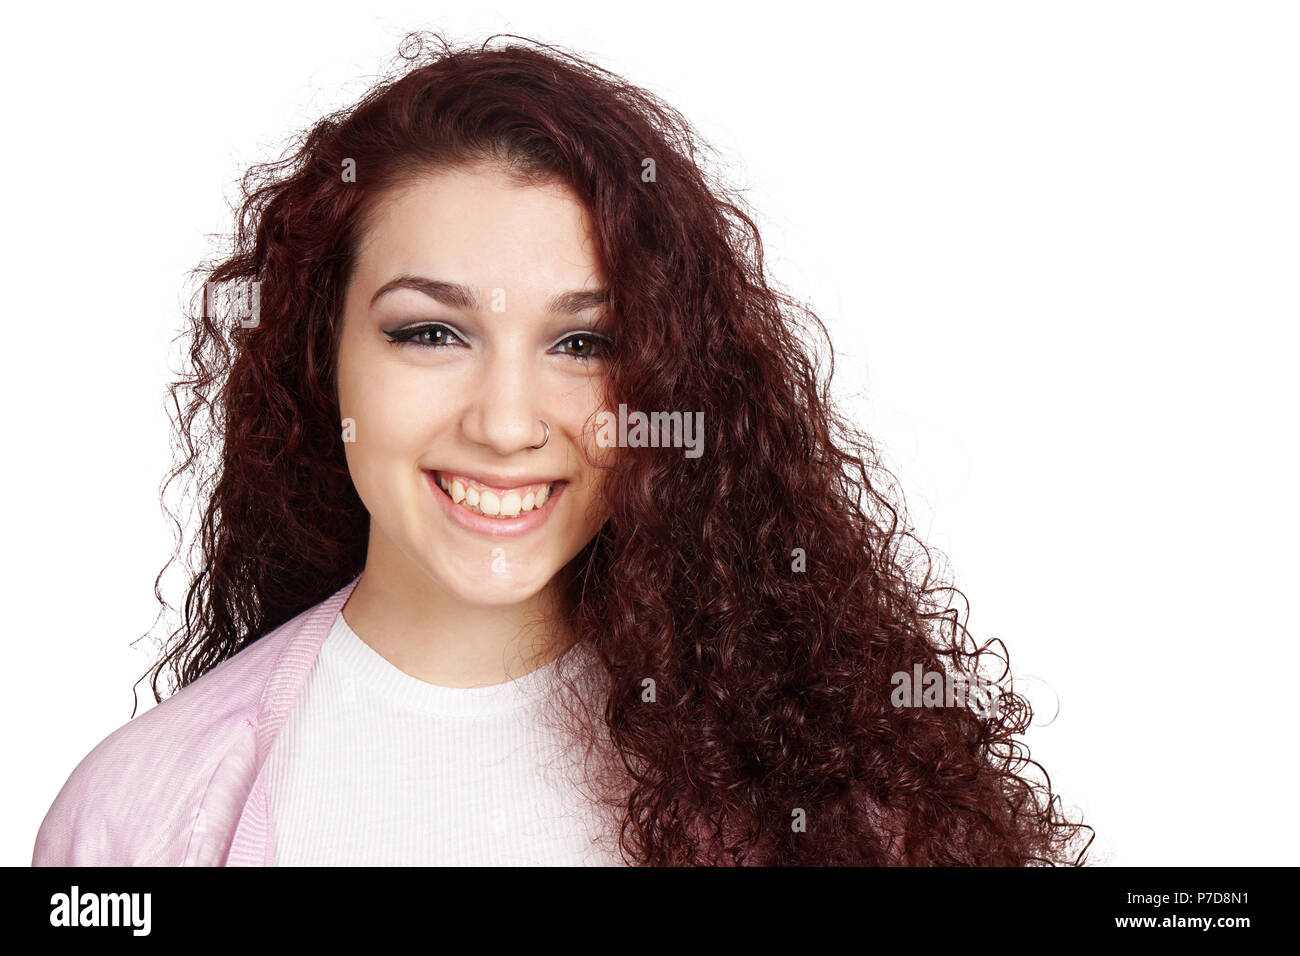 Teenage girl with long cheveux frisés et sourire à pleines dents isolated on white Banque D'Images